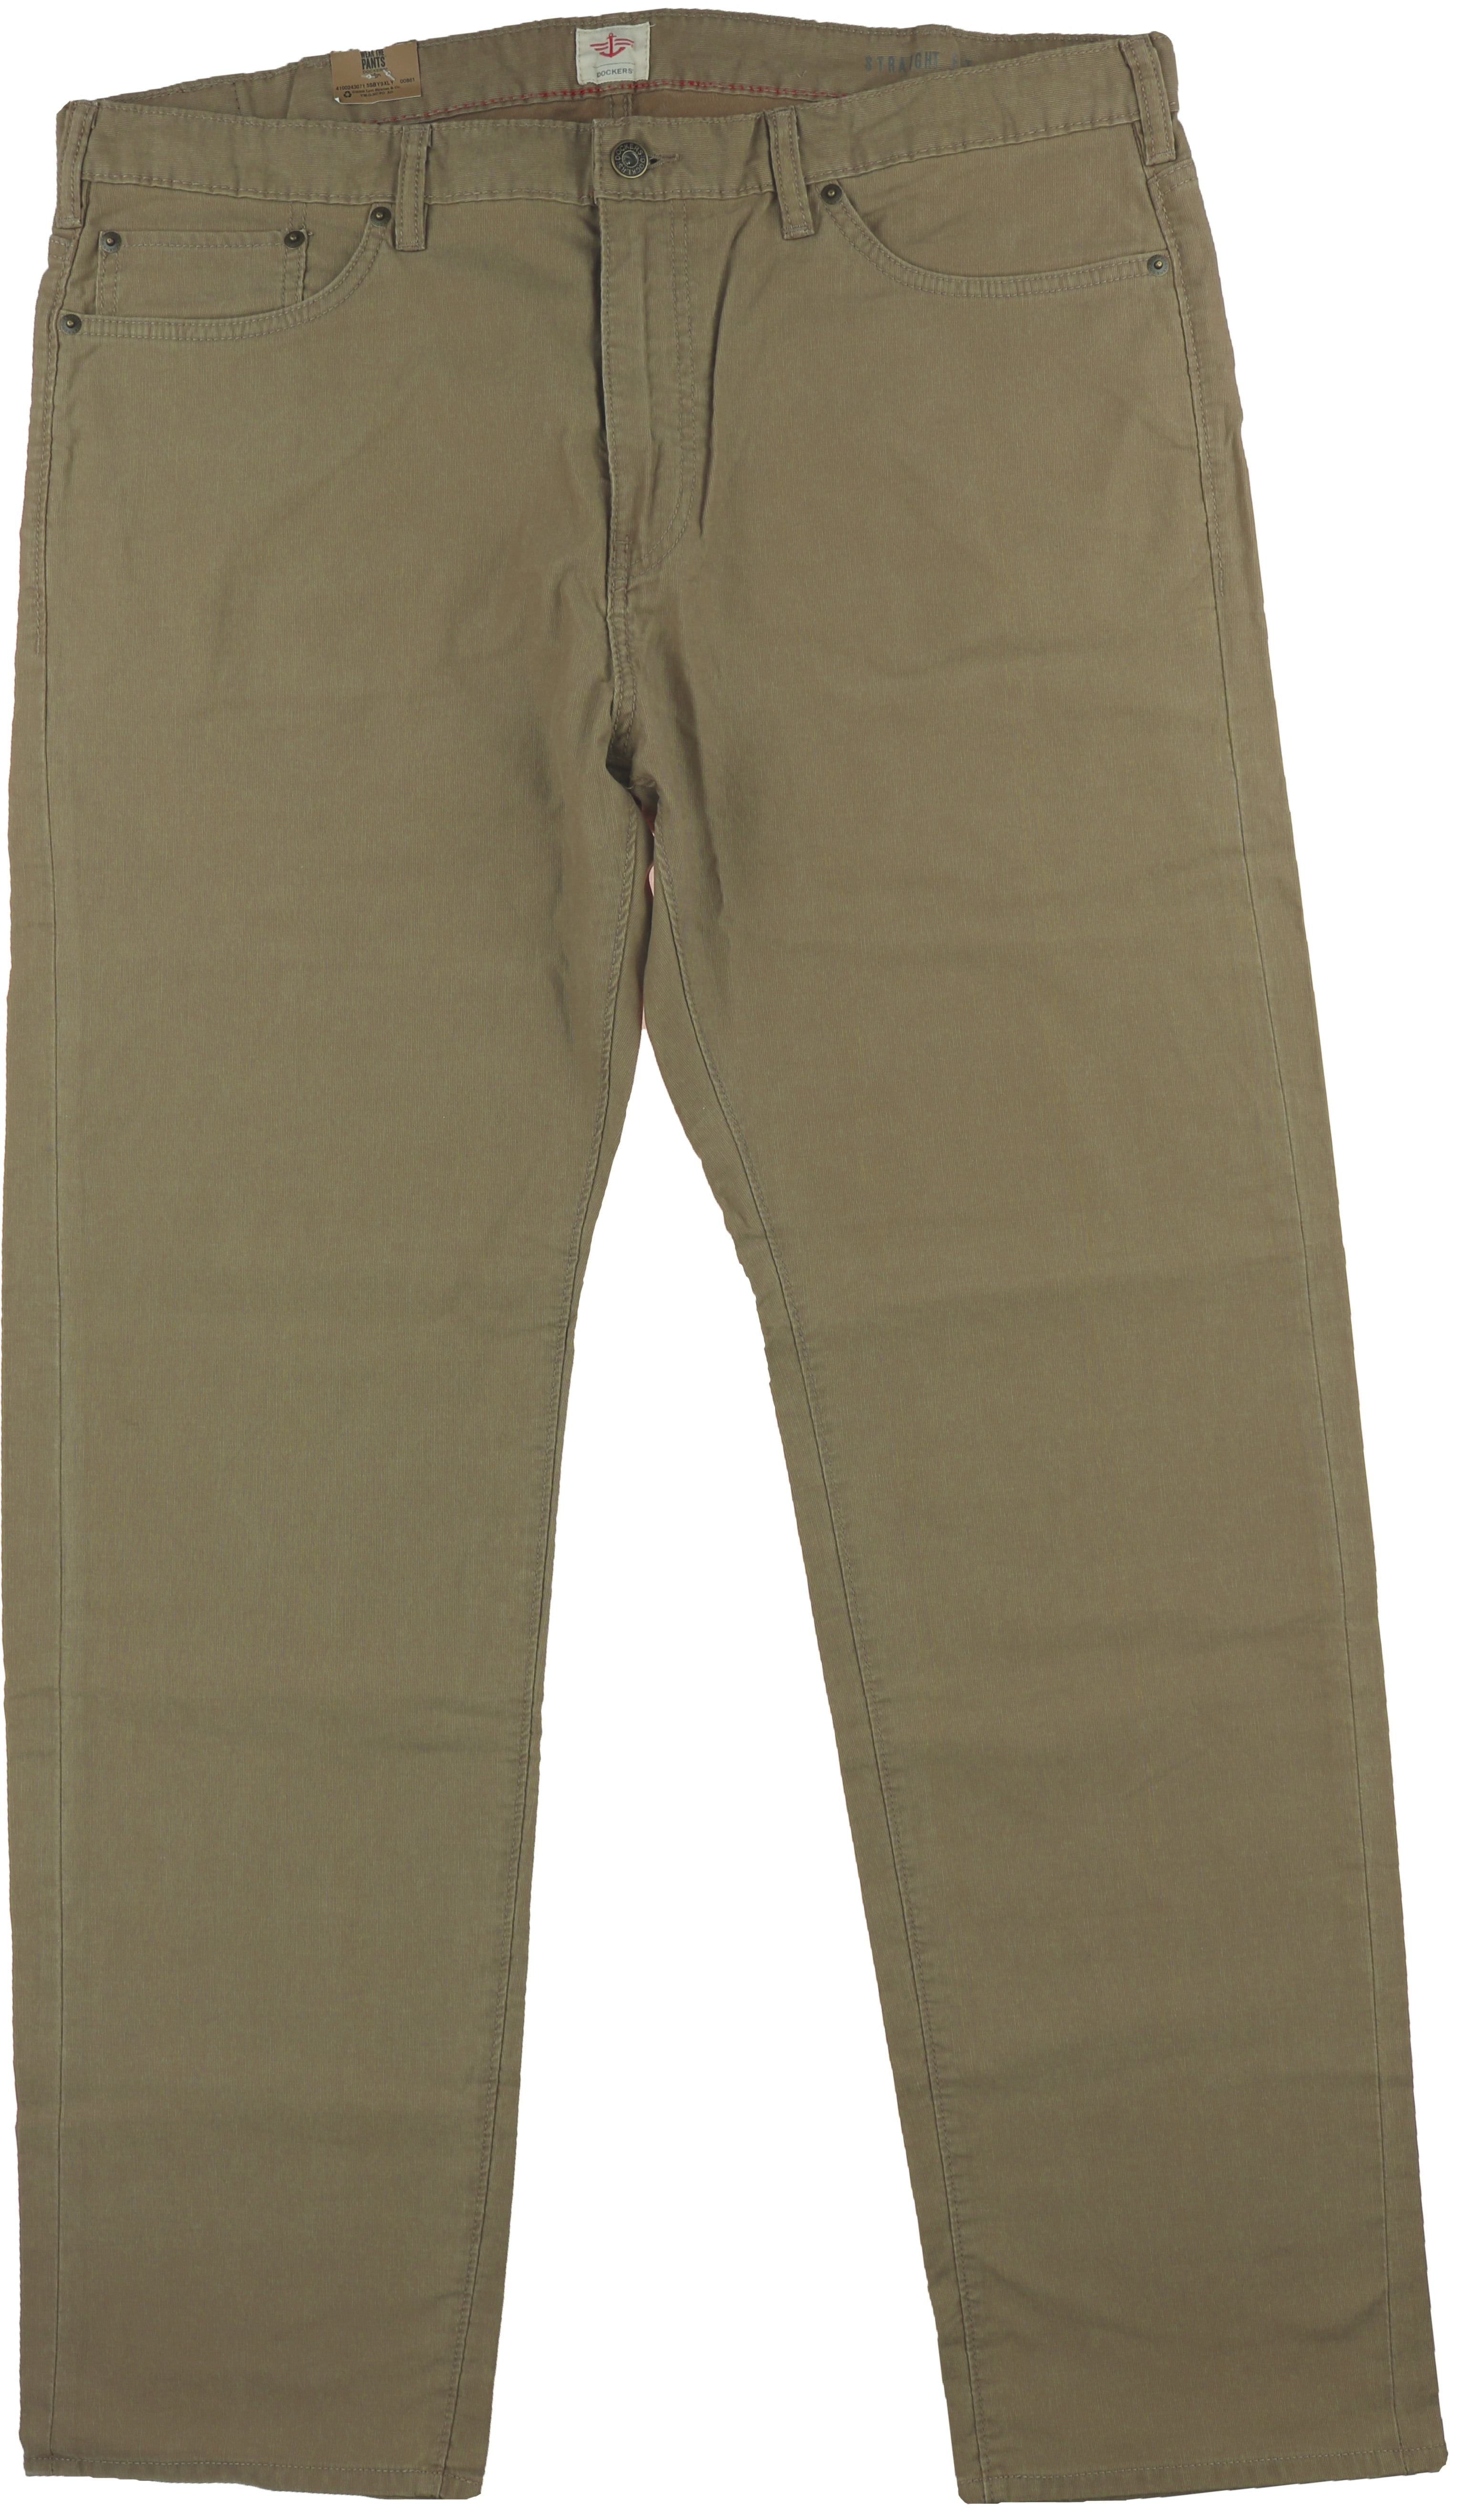 passage Goodwill Vol Dockers Pacific Collection Mens 5-Pocket Straight Fit Pants (Khaki, 36X32)  - Walmart.com